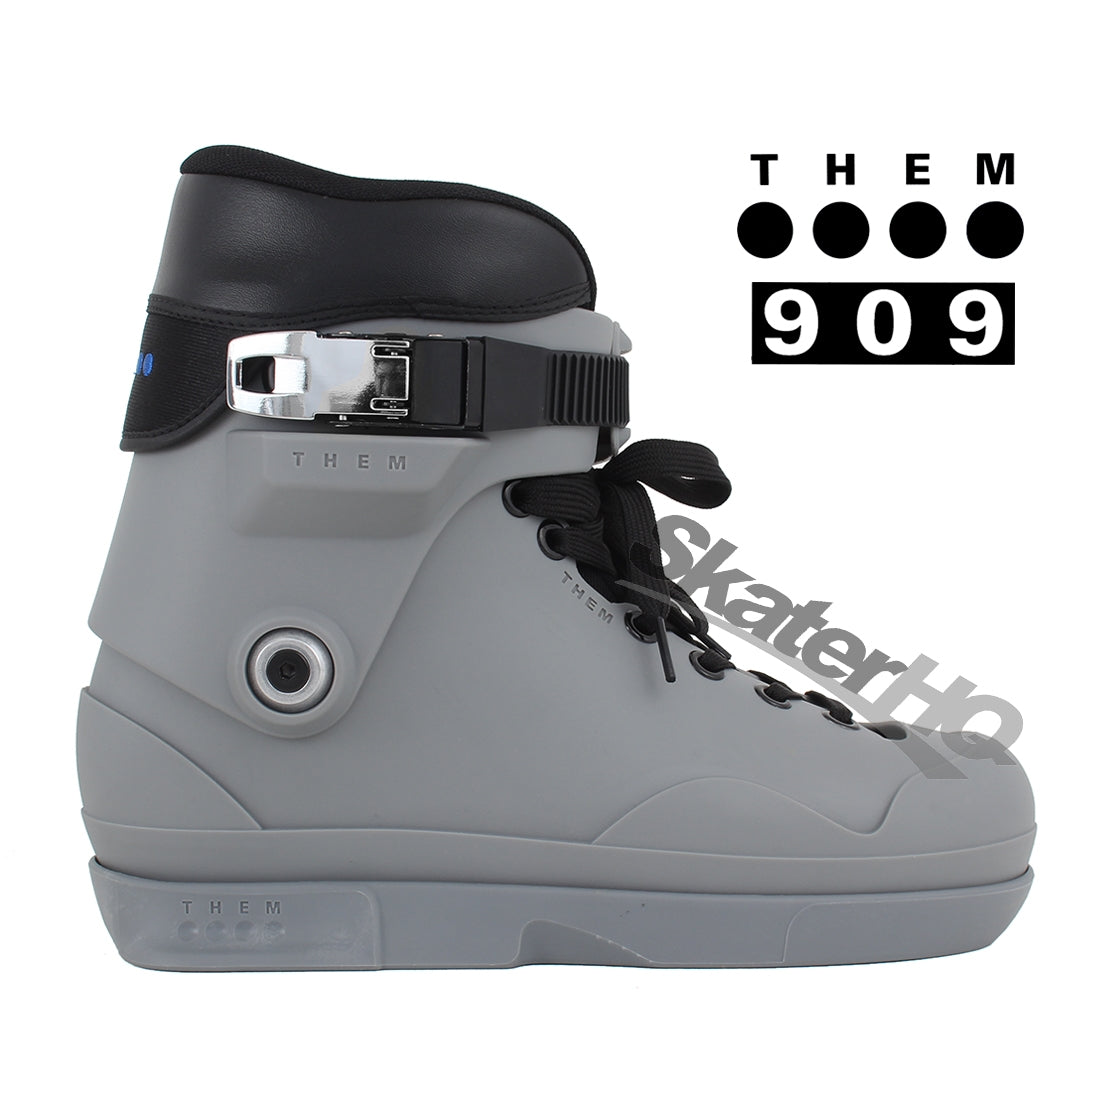 THEM 909 Boot Grey 9-10US Inline Aggressive Skates